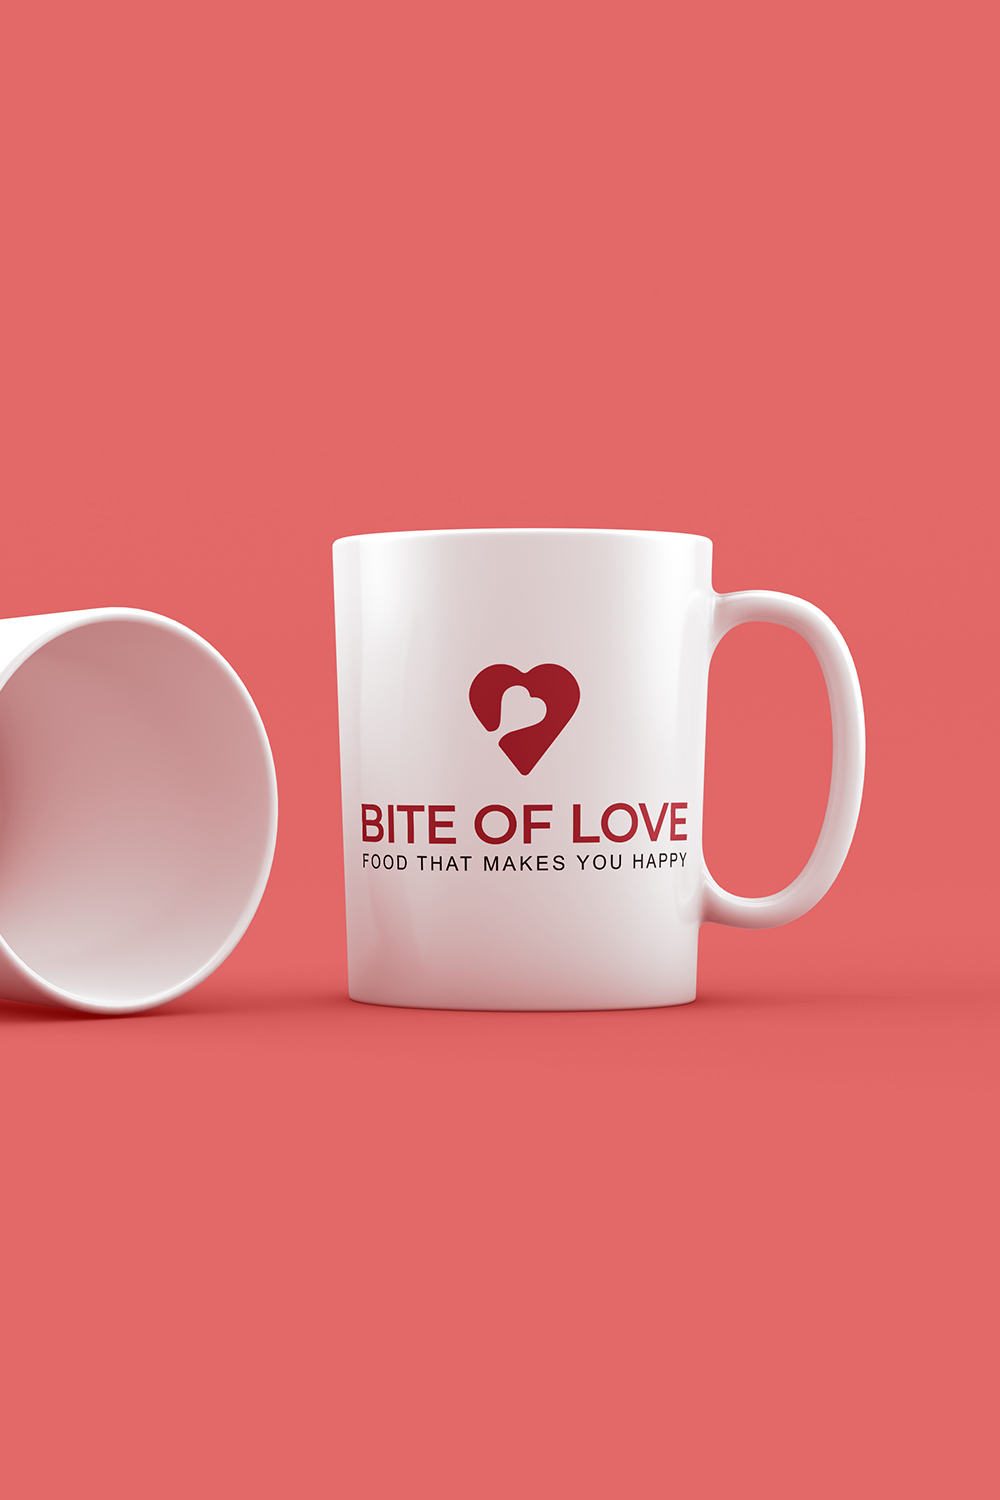 Bite Of Love - Logo Design pinterest preview image.